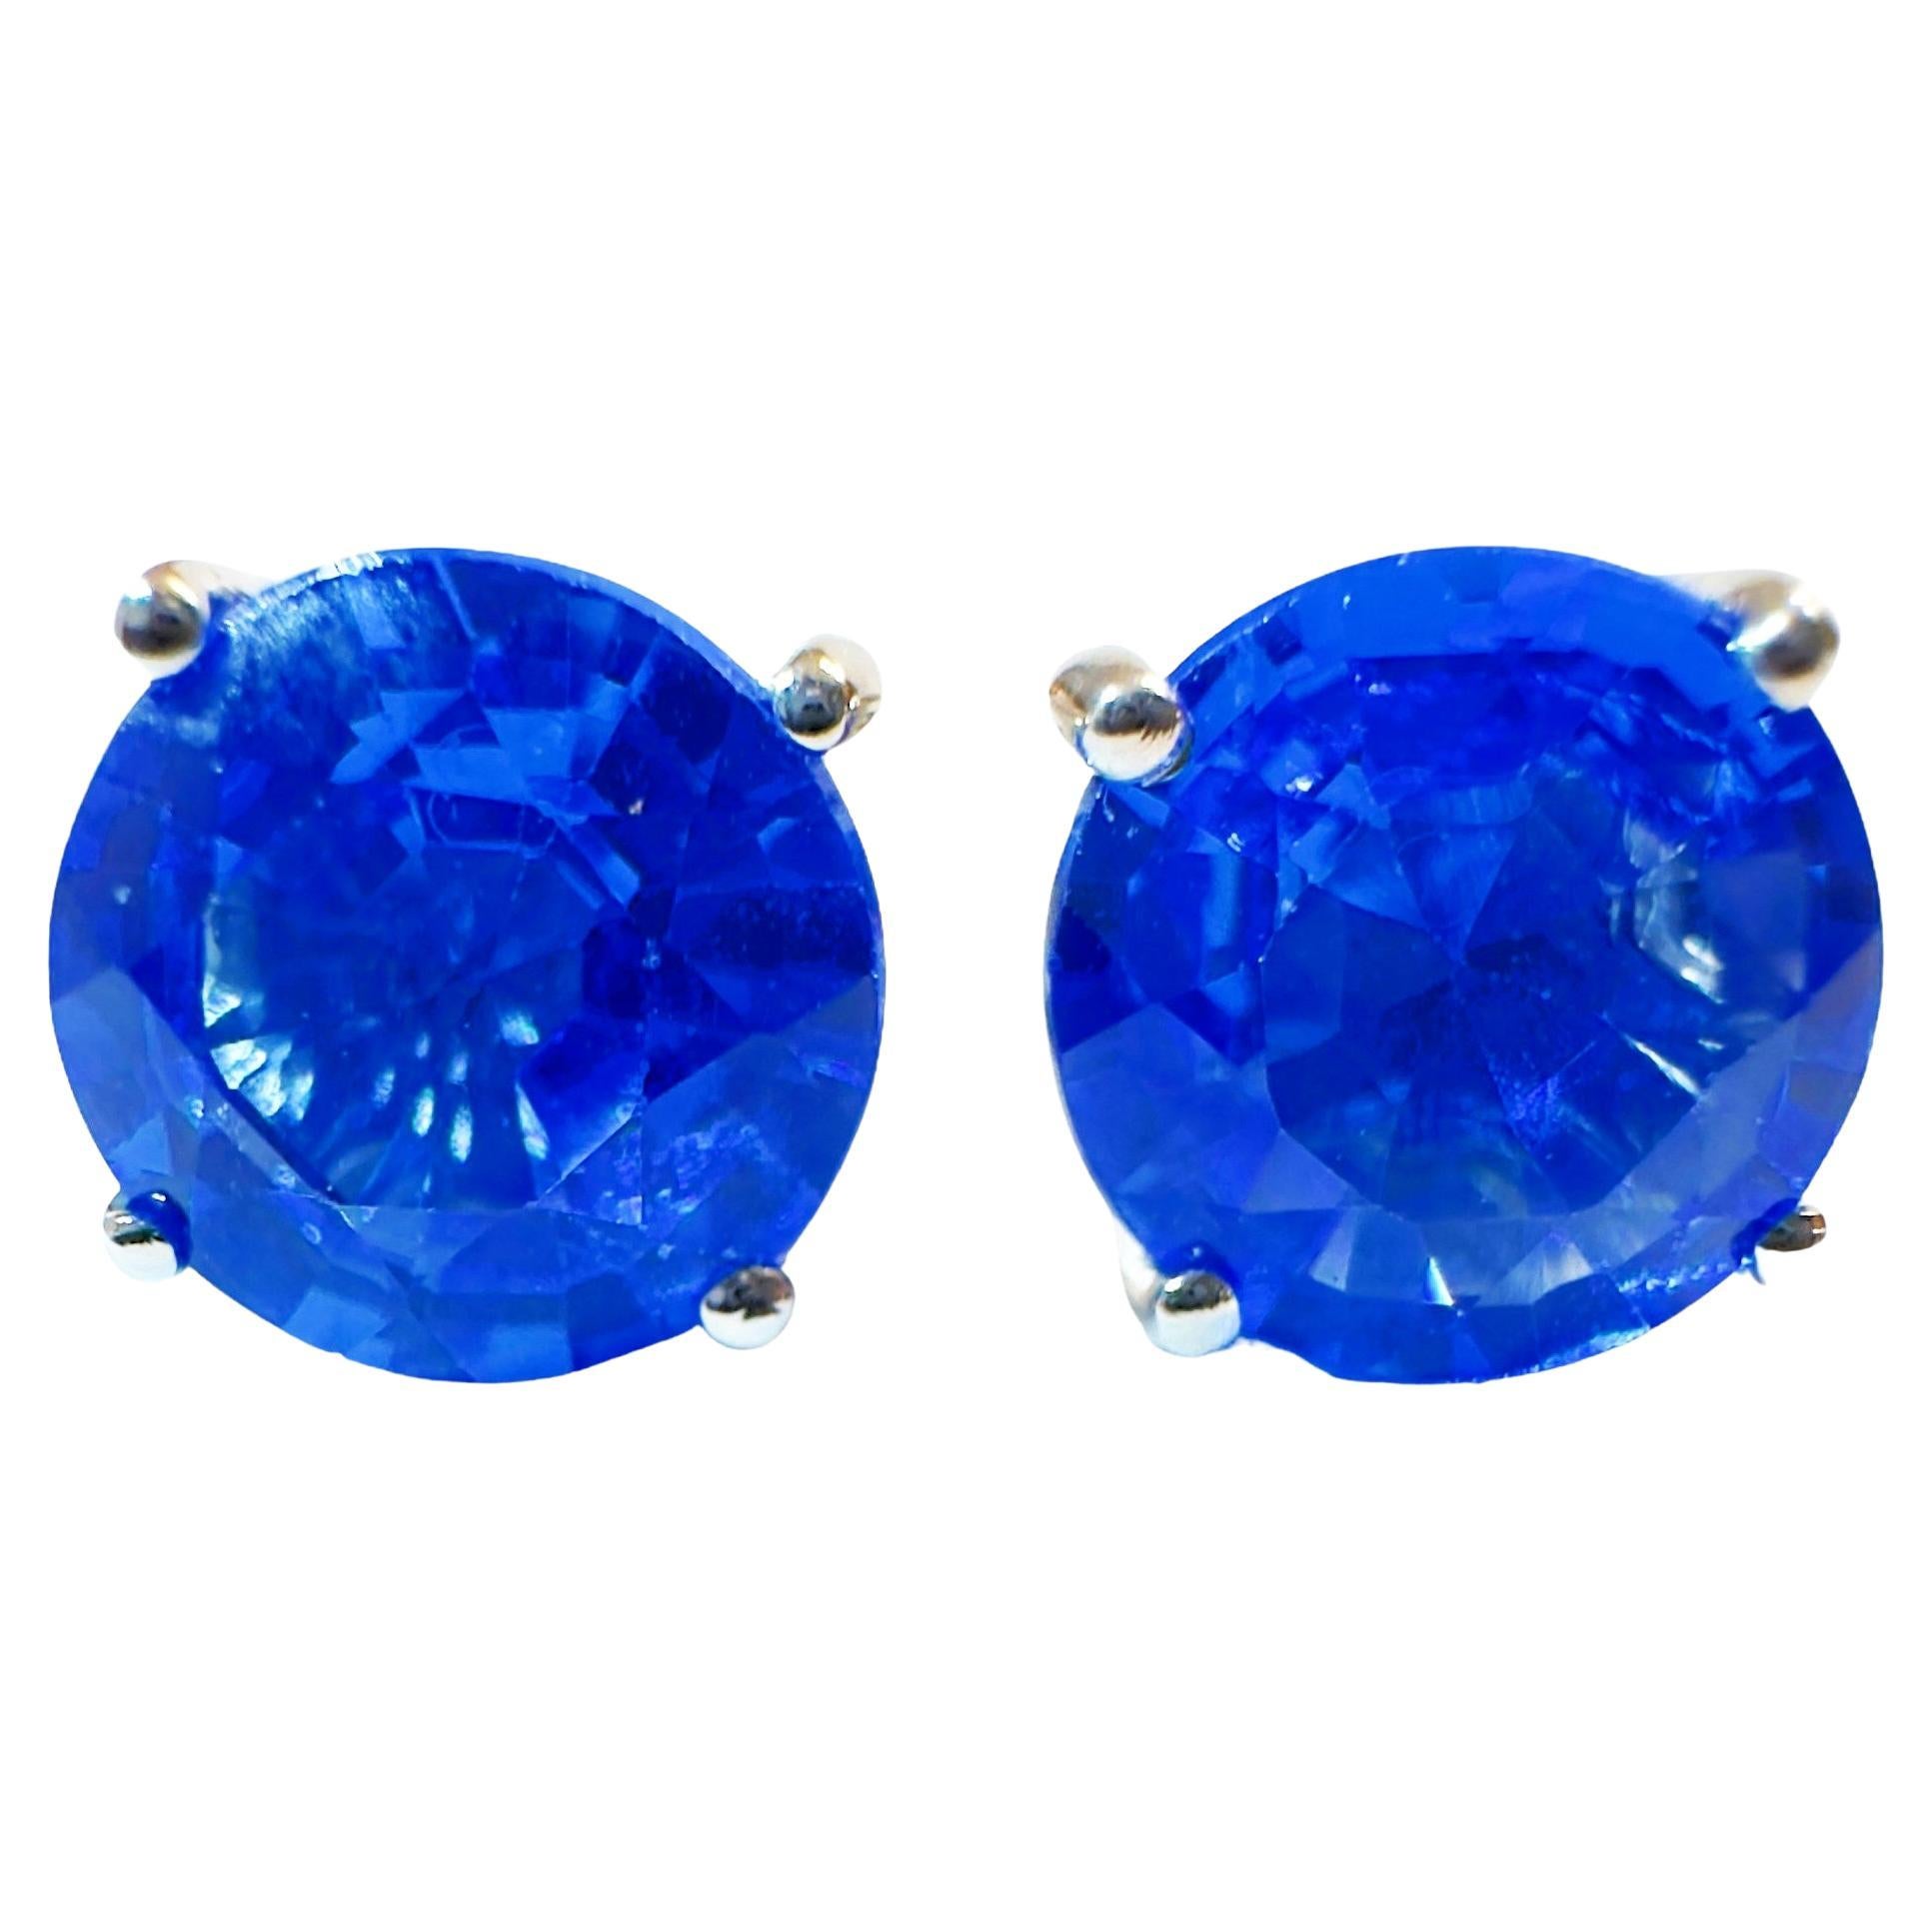 New Cambodian 4.30 ct Cobalt Blue Zircon Sterling Earrings